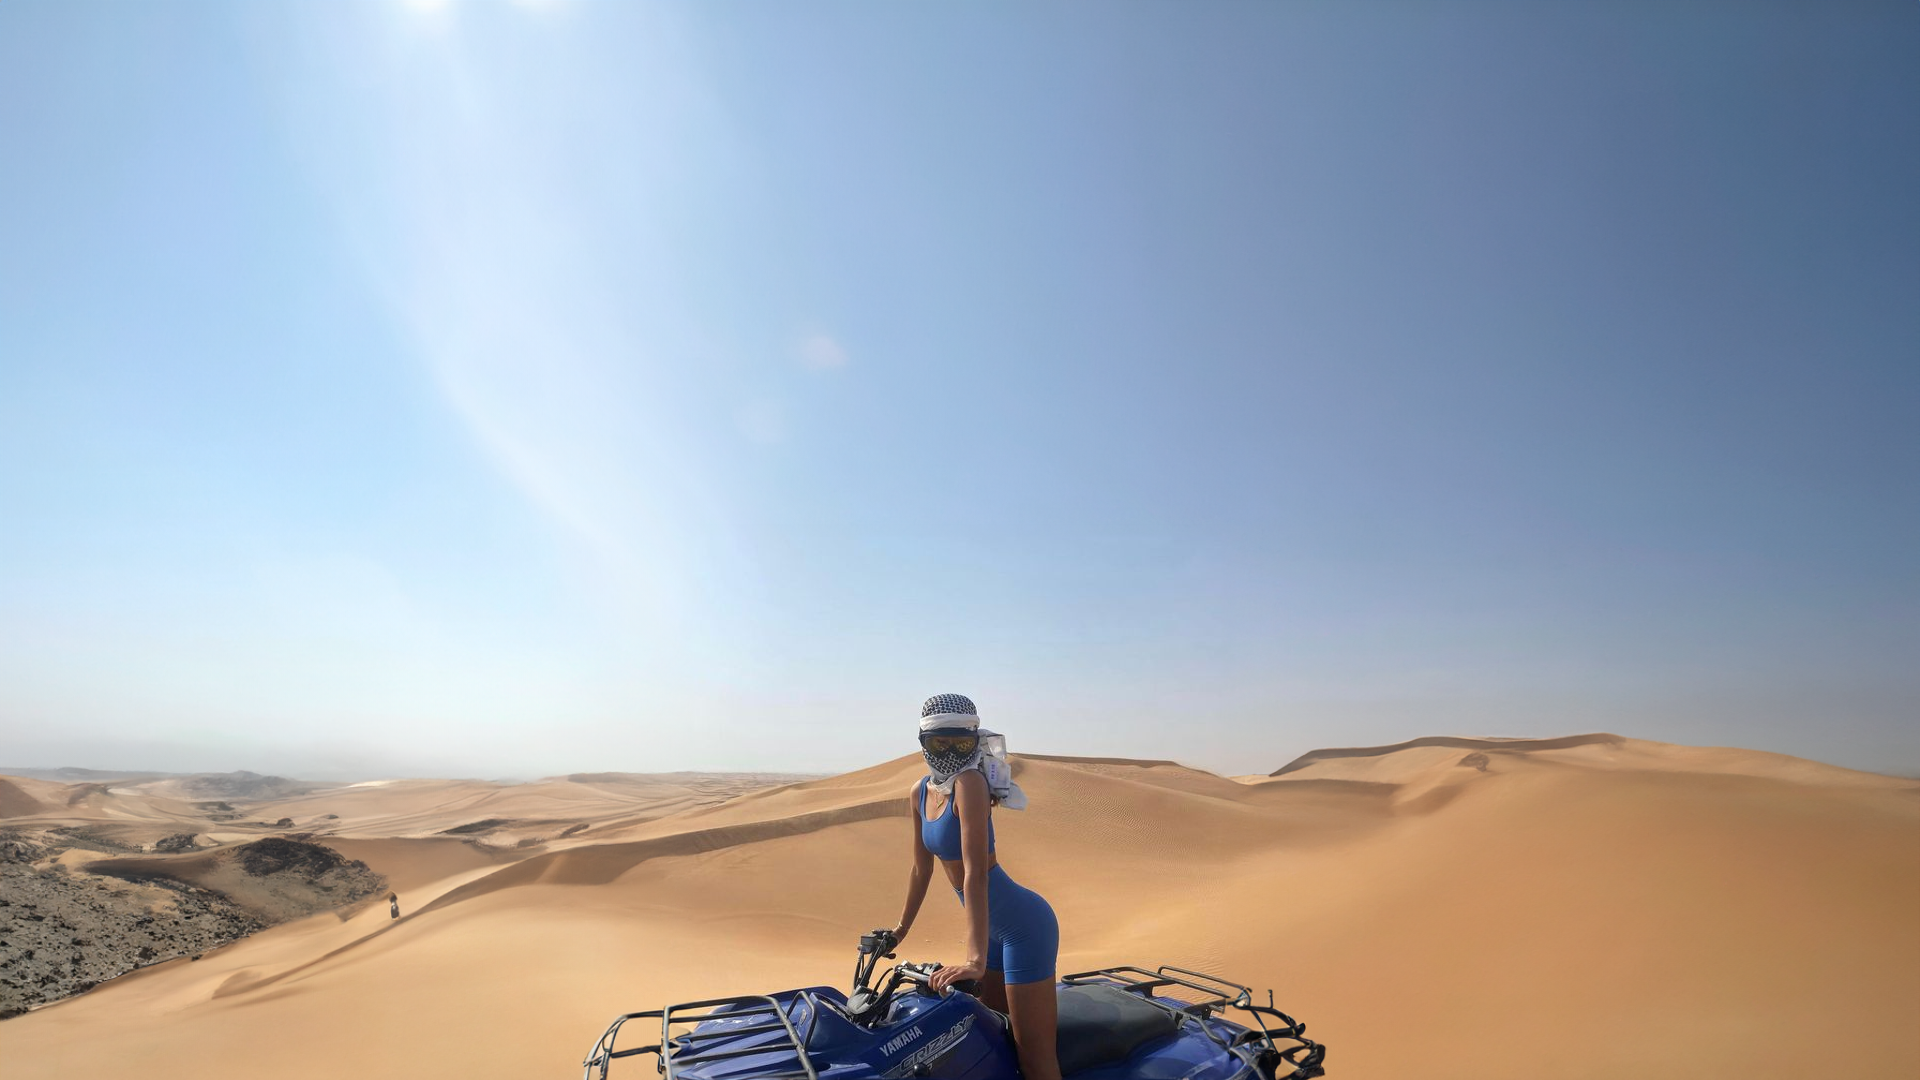 General 1920x1080 desert ATVs women simple background sand minimalism sky vehicle looking at viewer